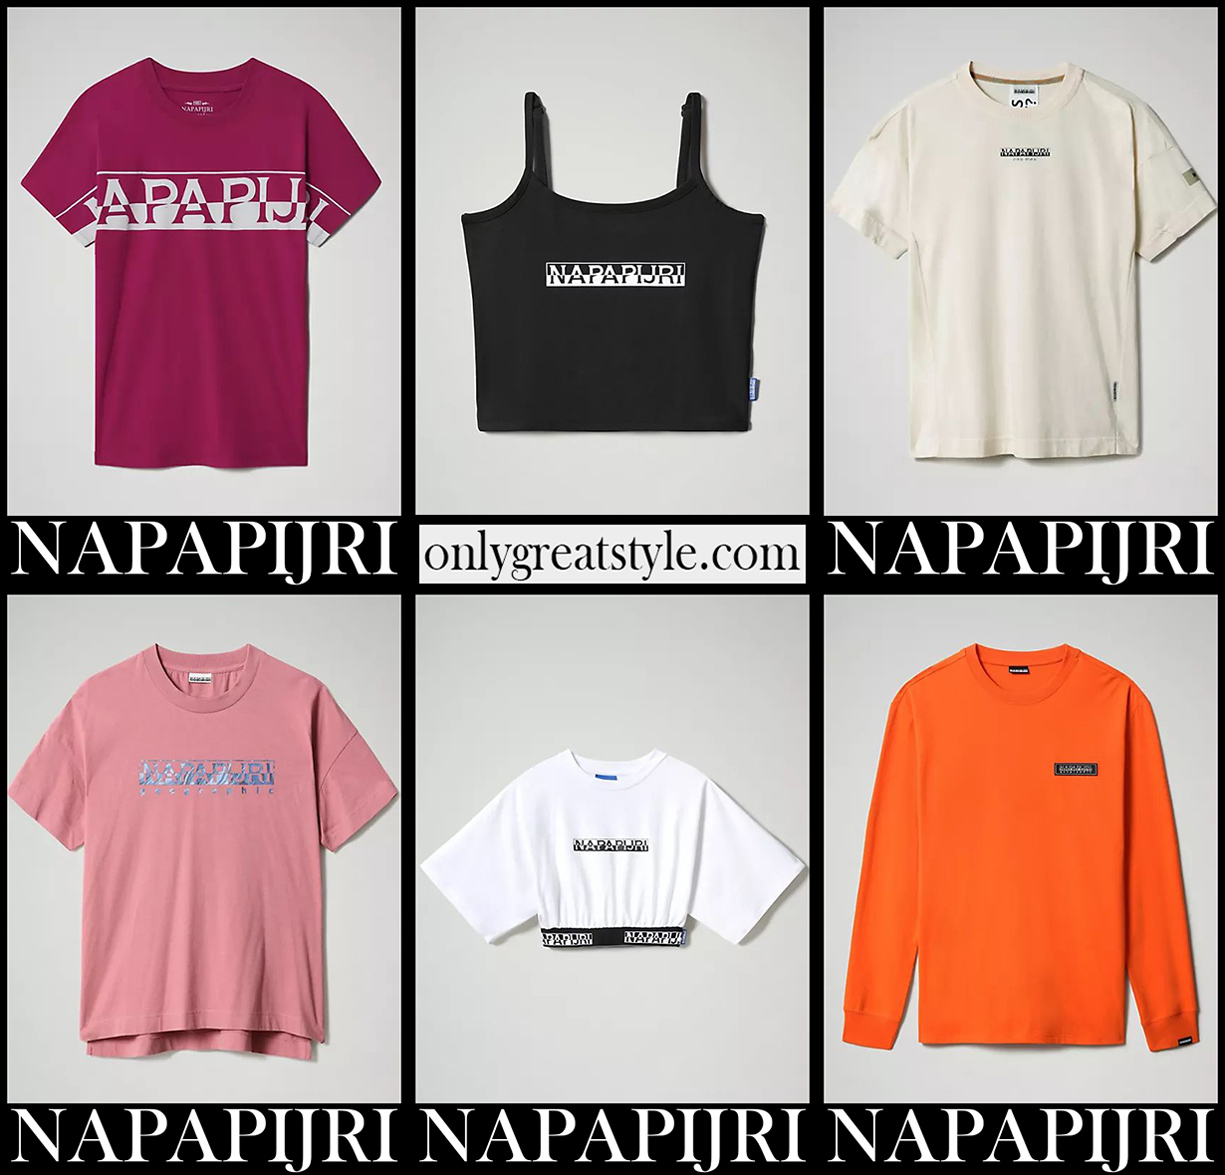 Napapijri t shirts 2021 new arrivals womens fashion